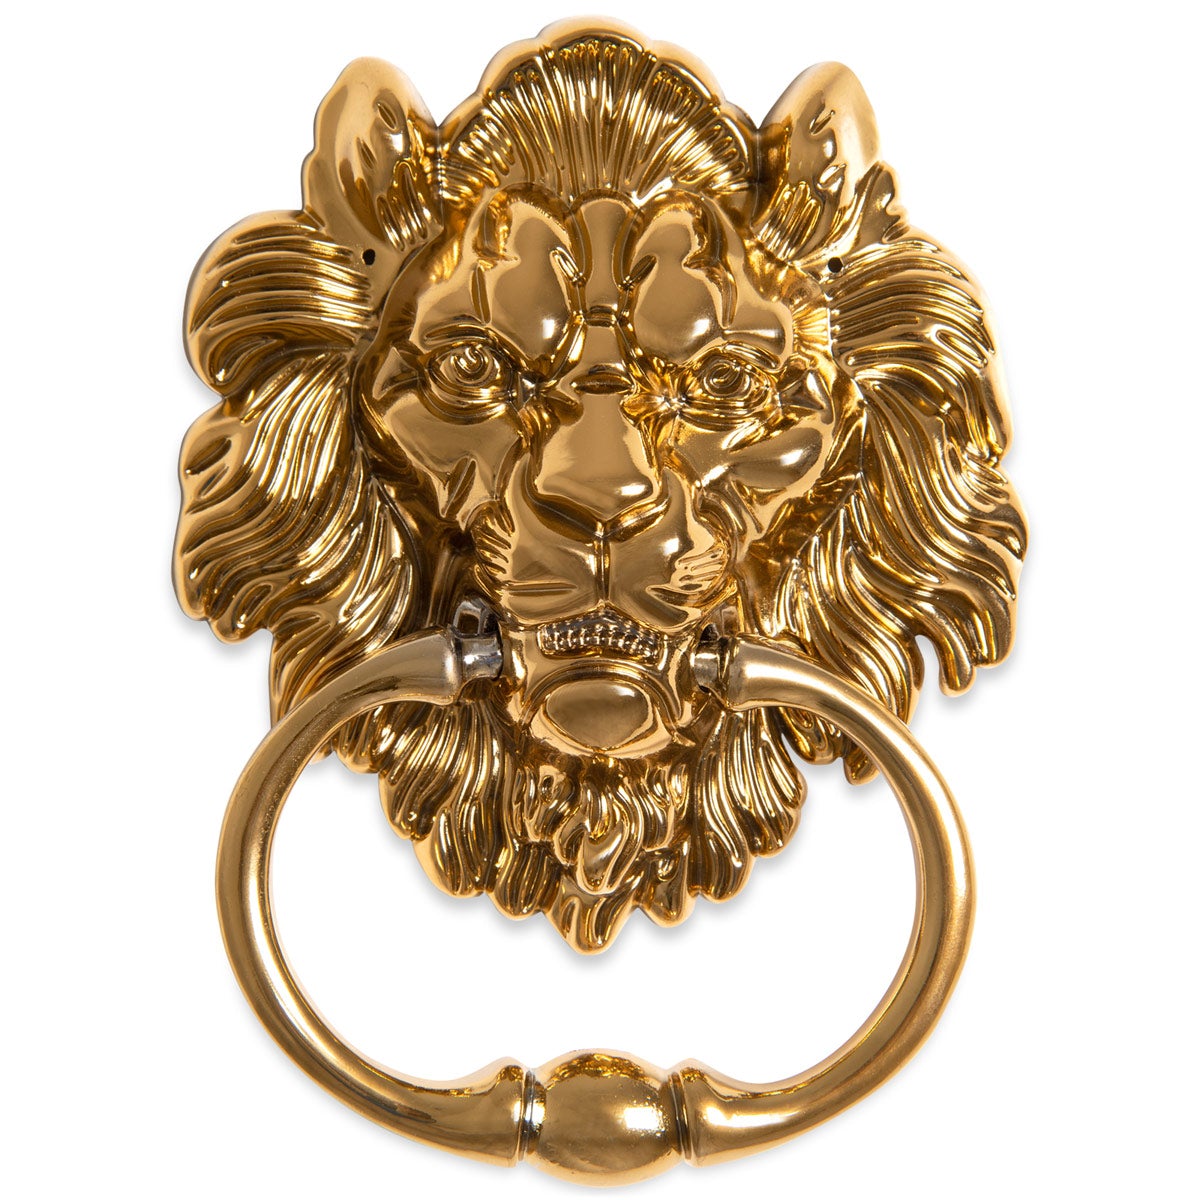 Lions Head Door Knocker, Brass (Set of 2) - ModShop1.com